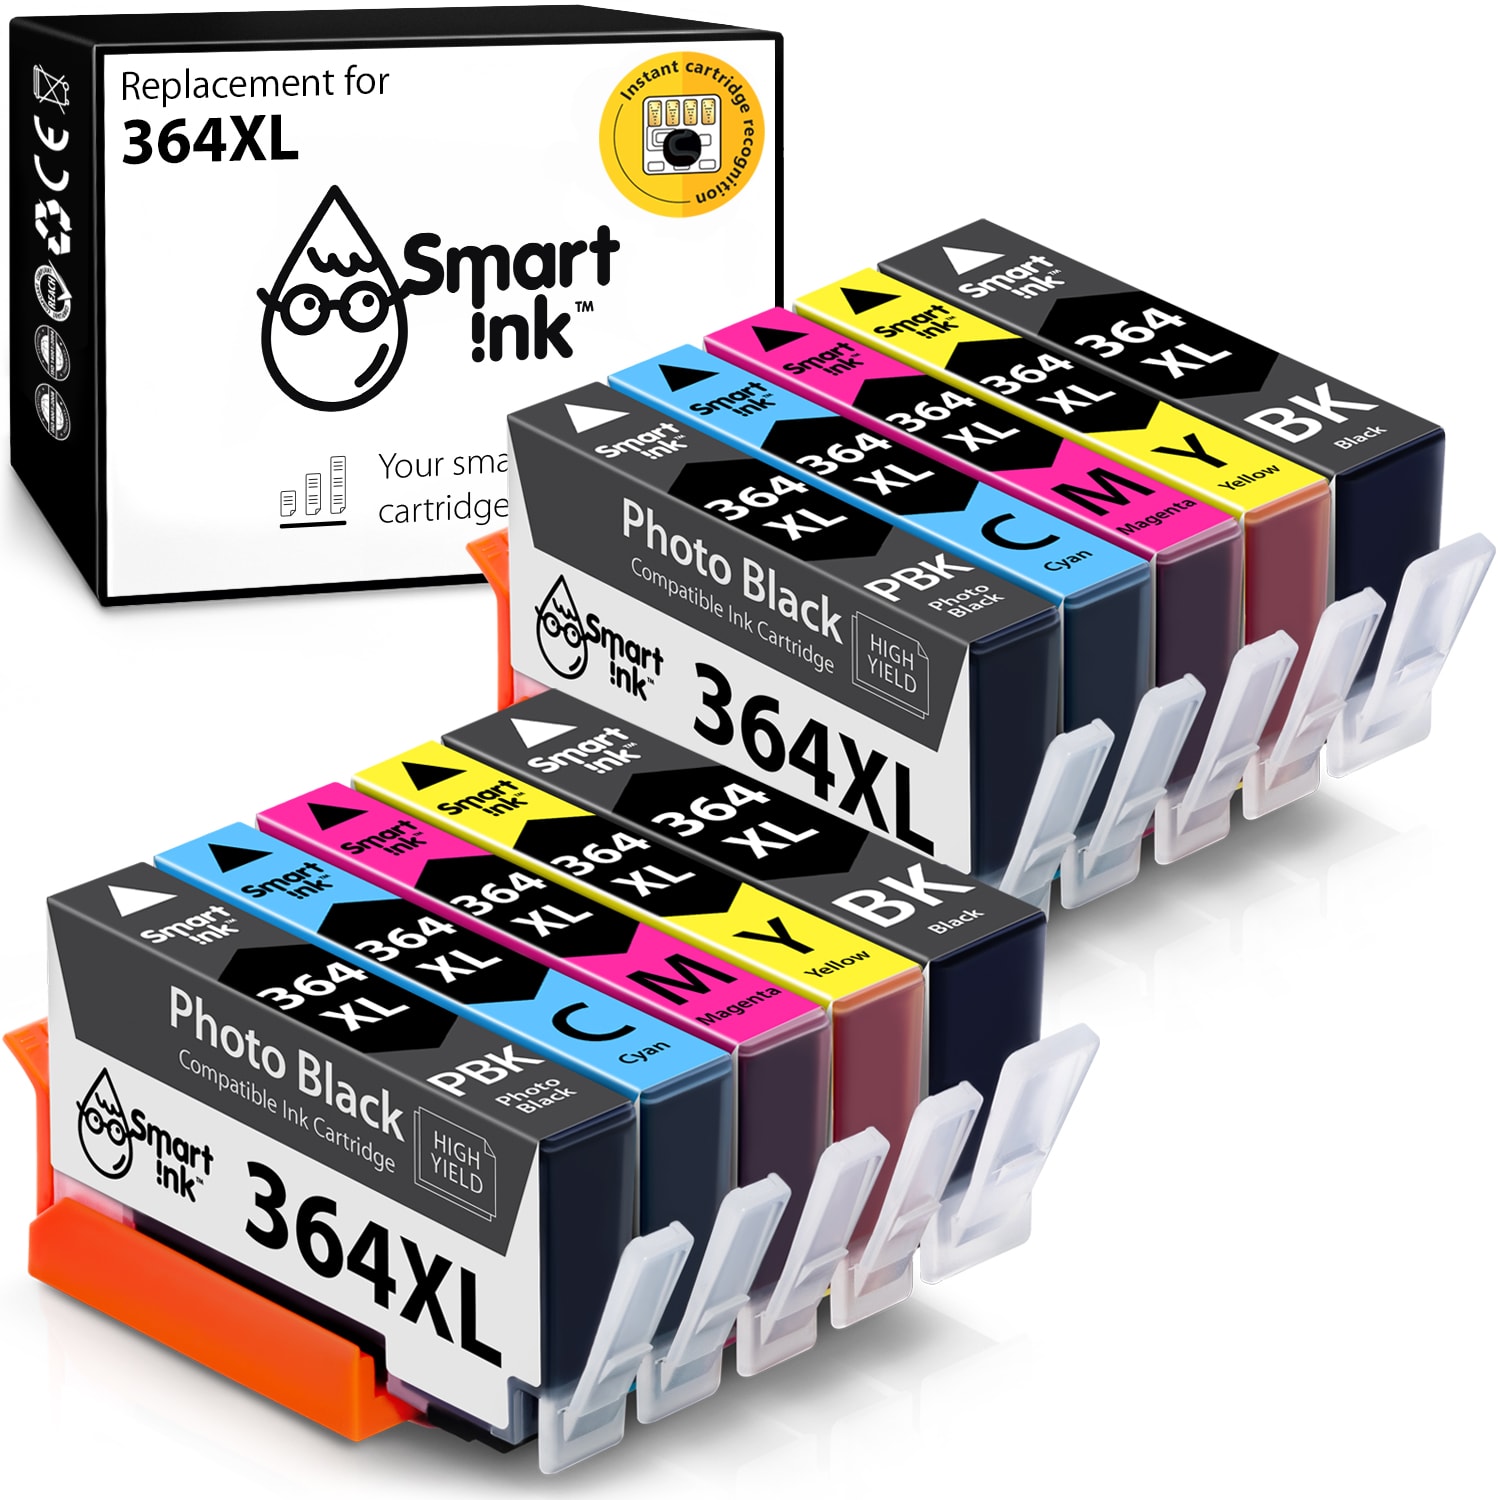 XL (Photo Black) Ink Cartridge - Buy Printer Cartridges in Europe at the price | Smart Ink